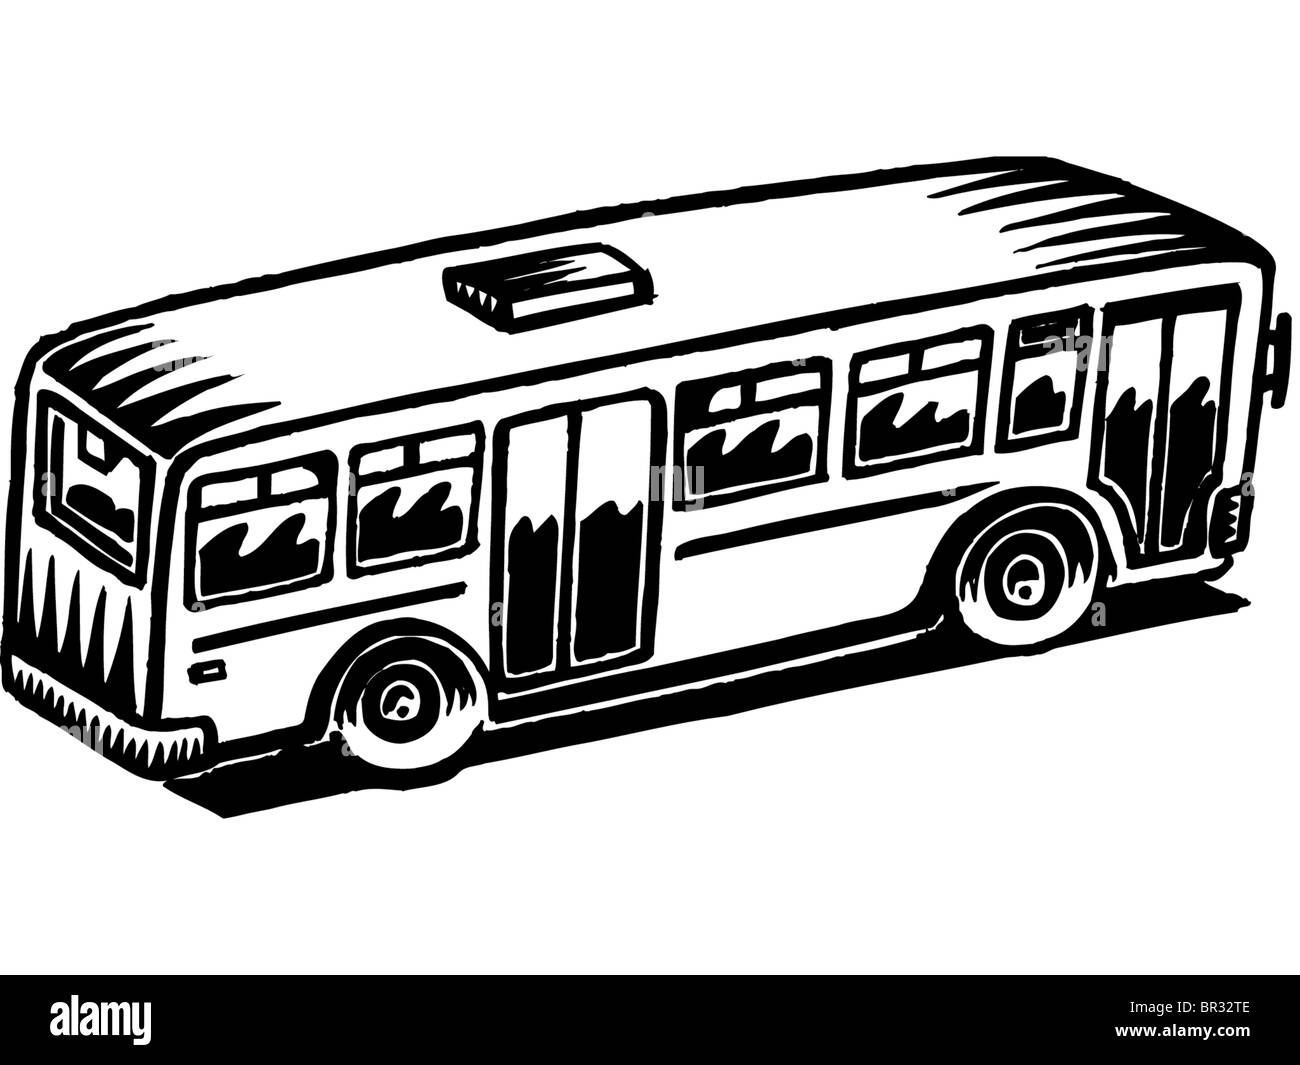 Cartoon bus Black and White Stock Photos & Images - Alamy